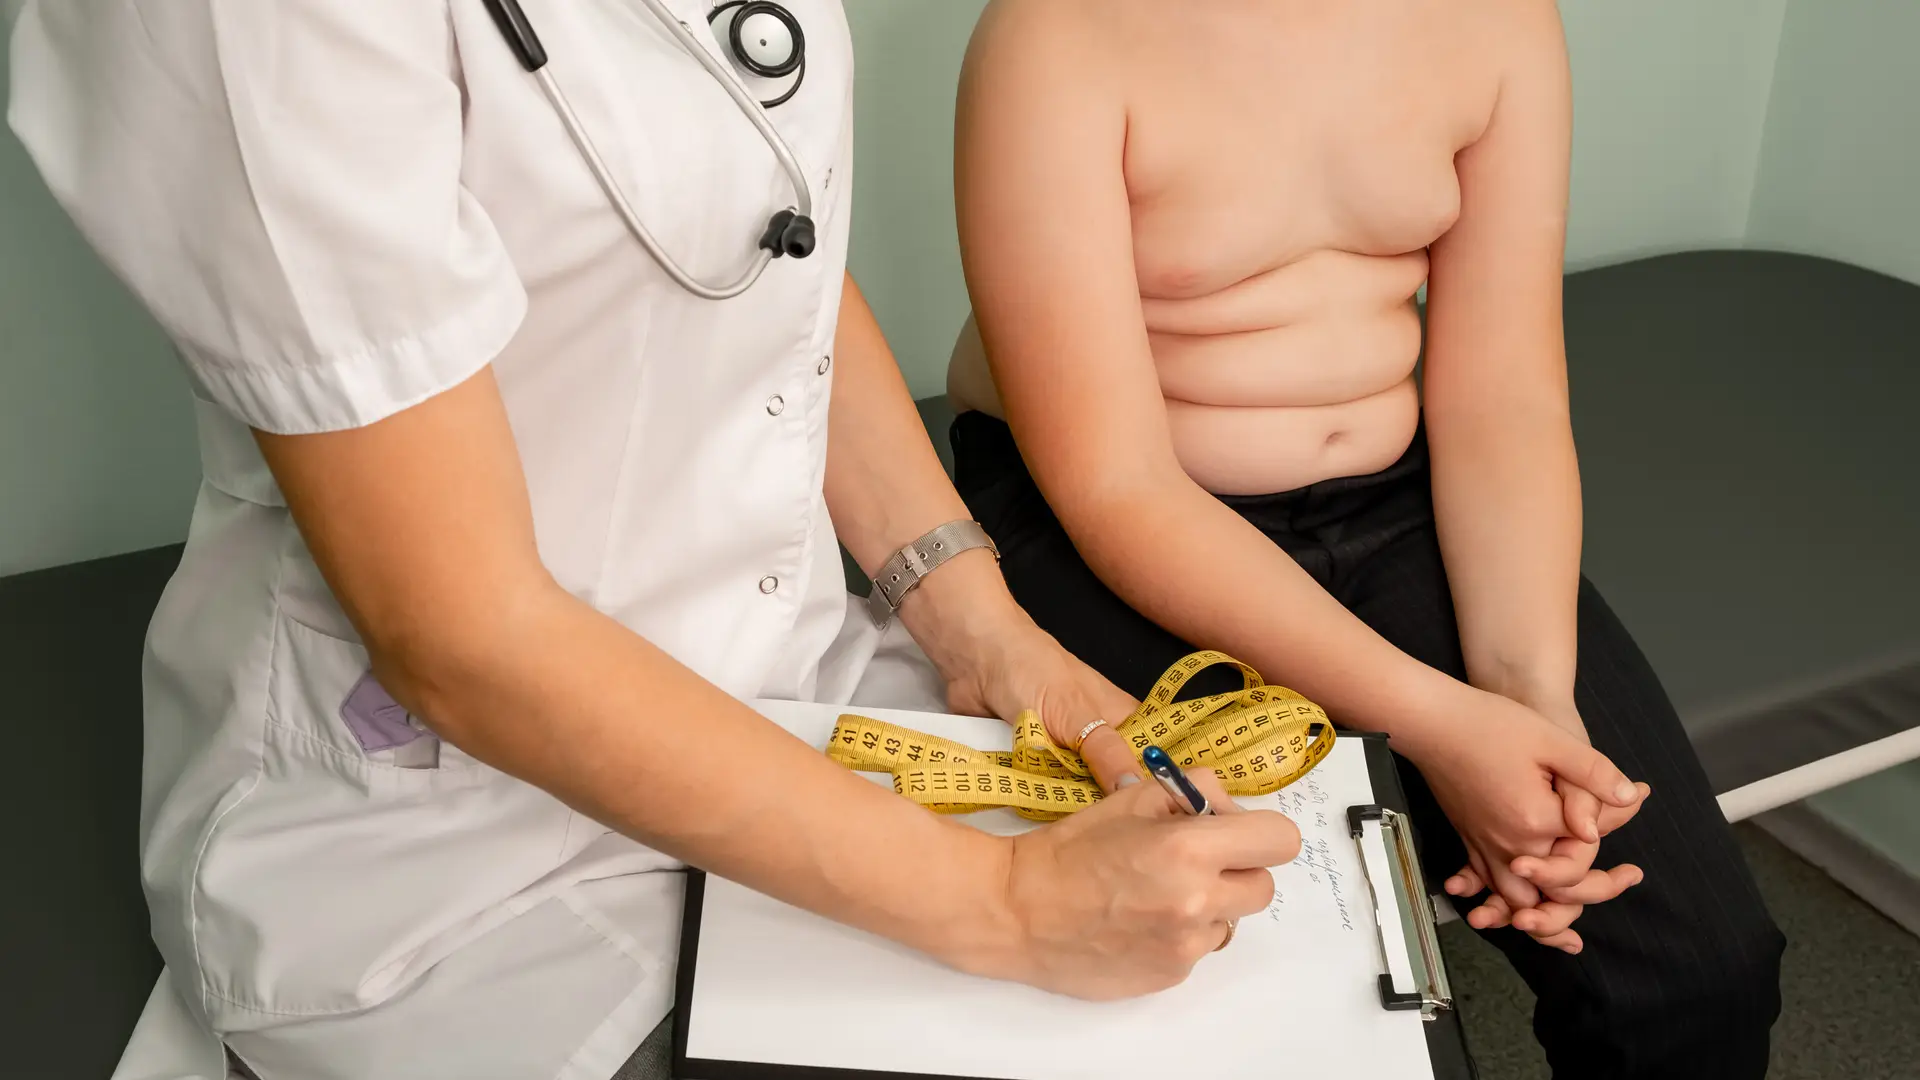 Obesidad infantil: índice de masa corporal mayor de percentil 95